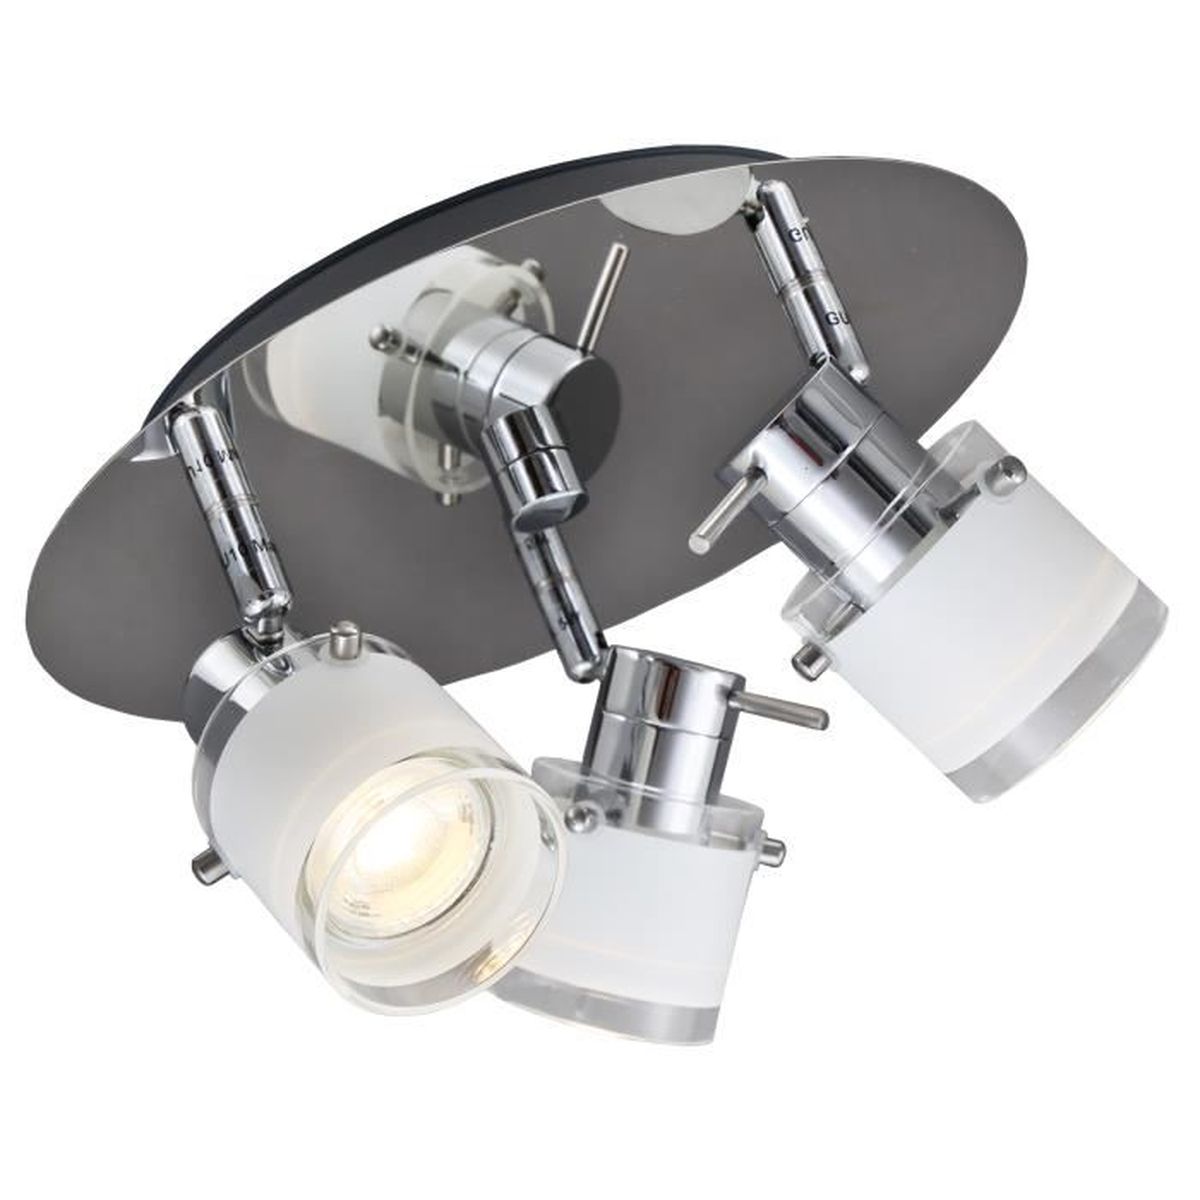 DEL ip44 Lampe Construction gu10 5 W Plafonnier Projecteur Downlight Plafonnier Deckenspot